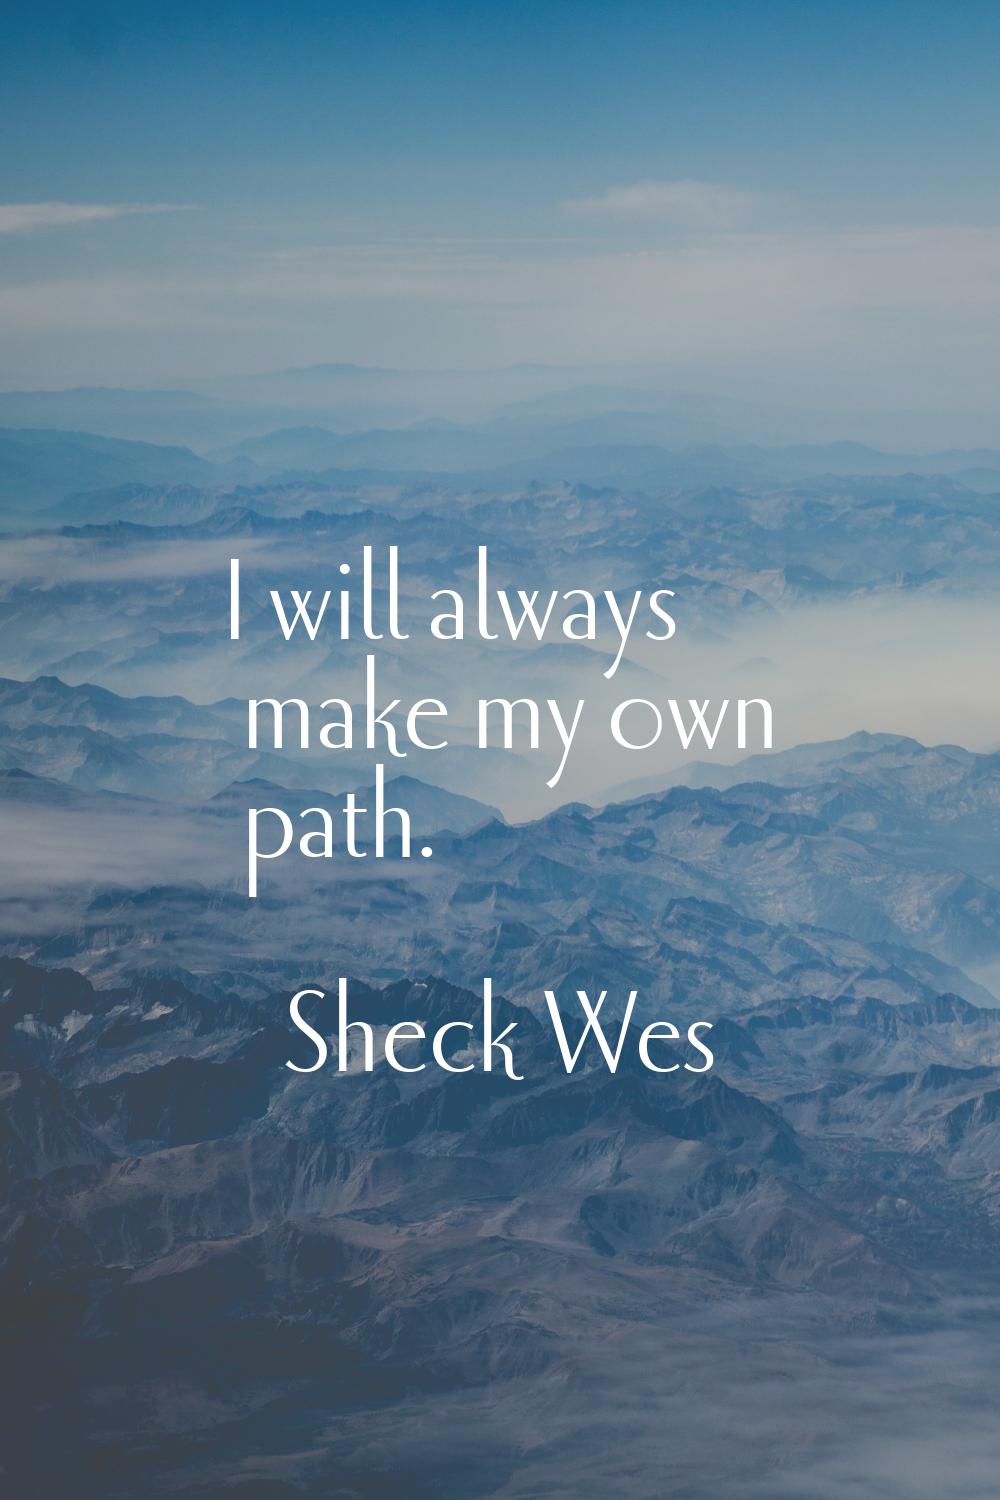 I will always make my own path.